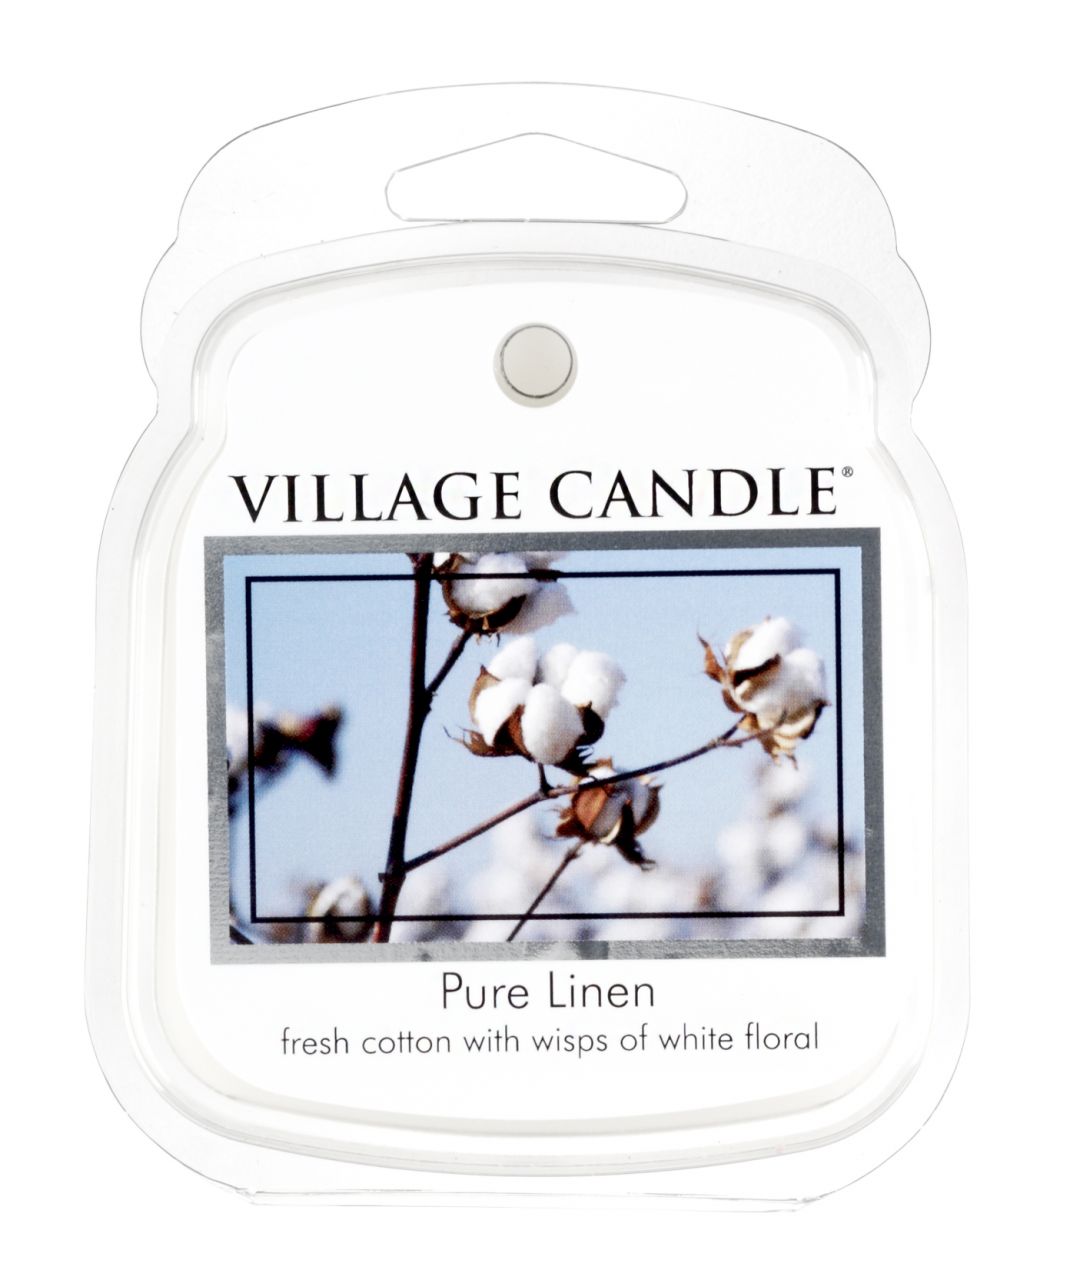 Village Candle Rozpustný vosk do aromalampy Čisté prádlo (Pure Linen) 62 g